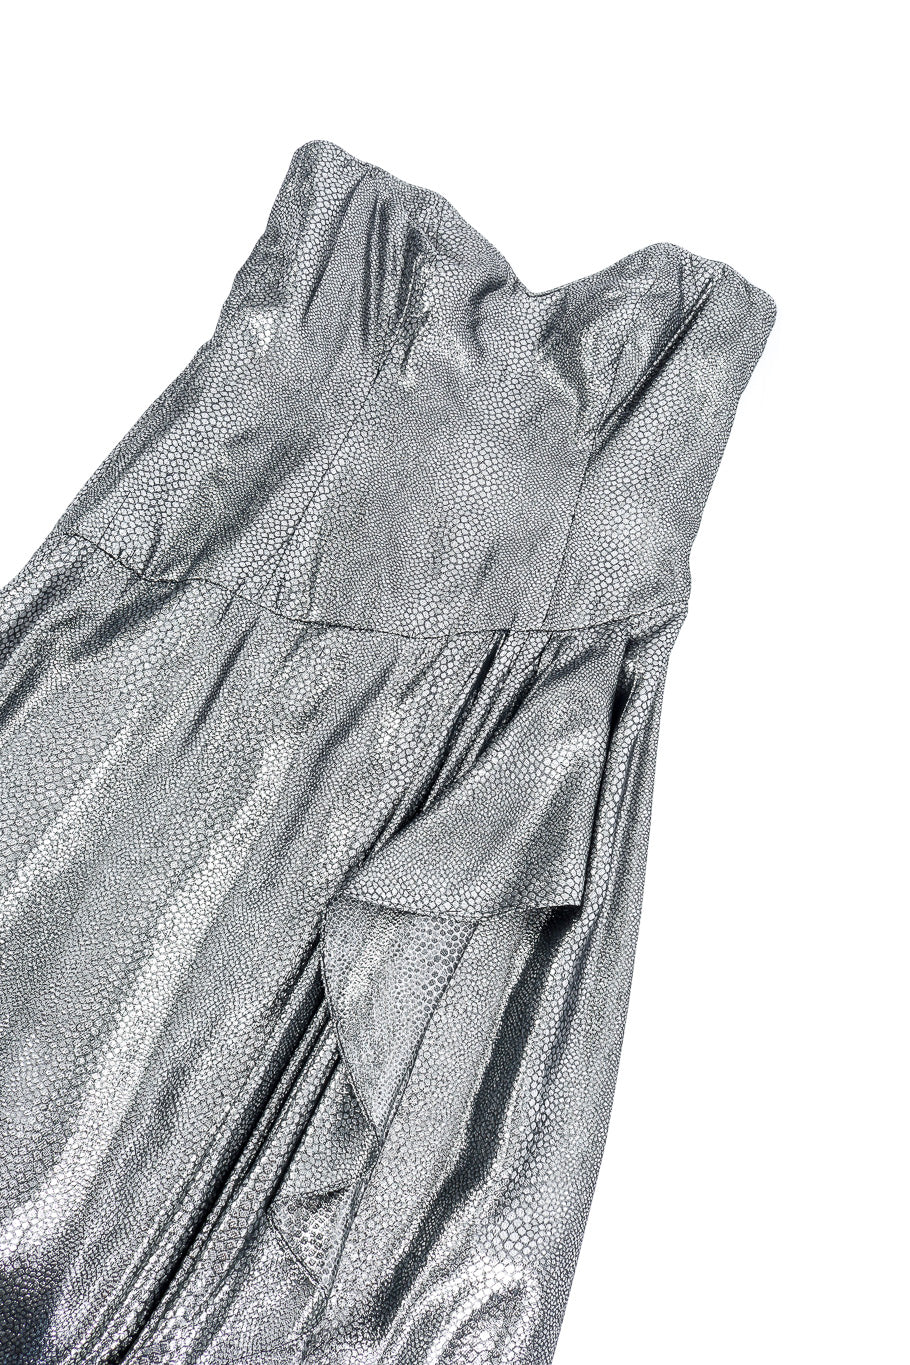 Metallic dress by Tracy Mills flat lay bodice front @recessla